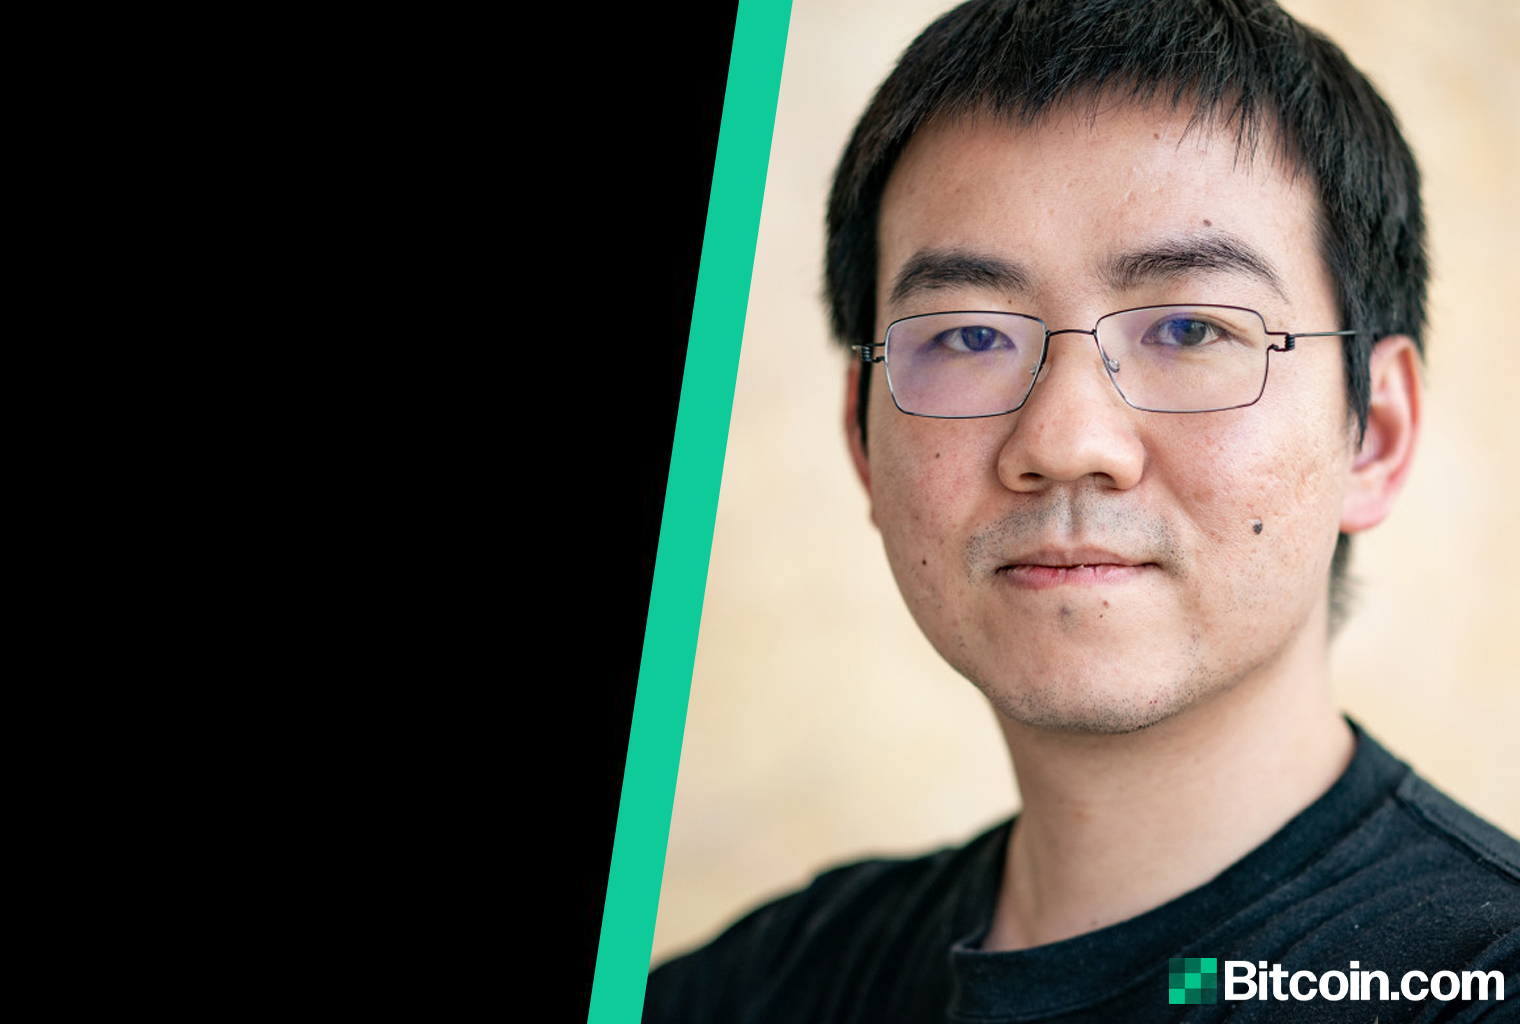 Bitmain's Jihan Wu Talks Mining and Industry Growth With Bitcoin.com's CEO